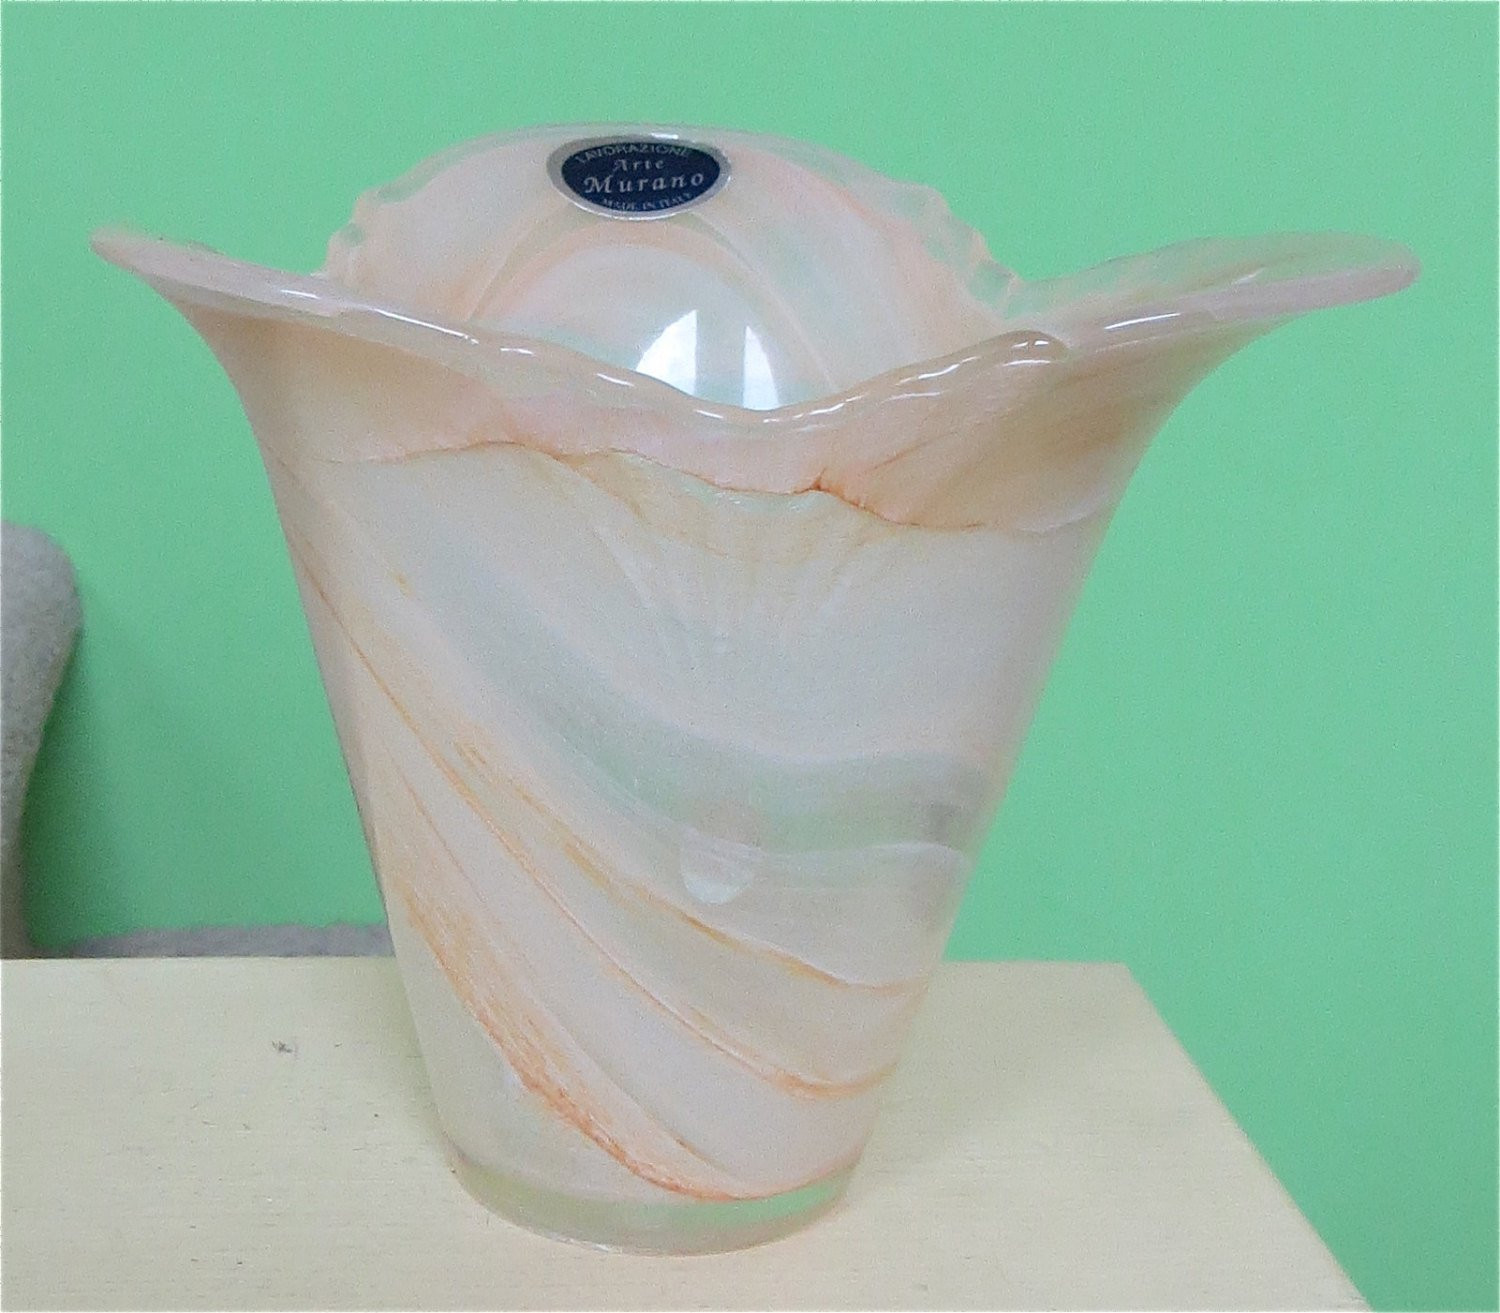 24 Recommended Murano Italy Glass Vase 2023 free download murano italy glass vase of 1950s murano art glass vase lavorazione arte murano italy etsy within dc29fc294c28epowiac299ksz